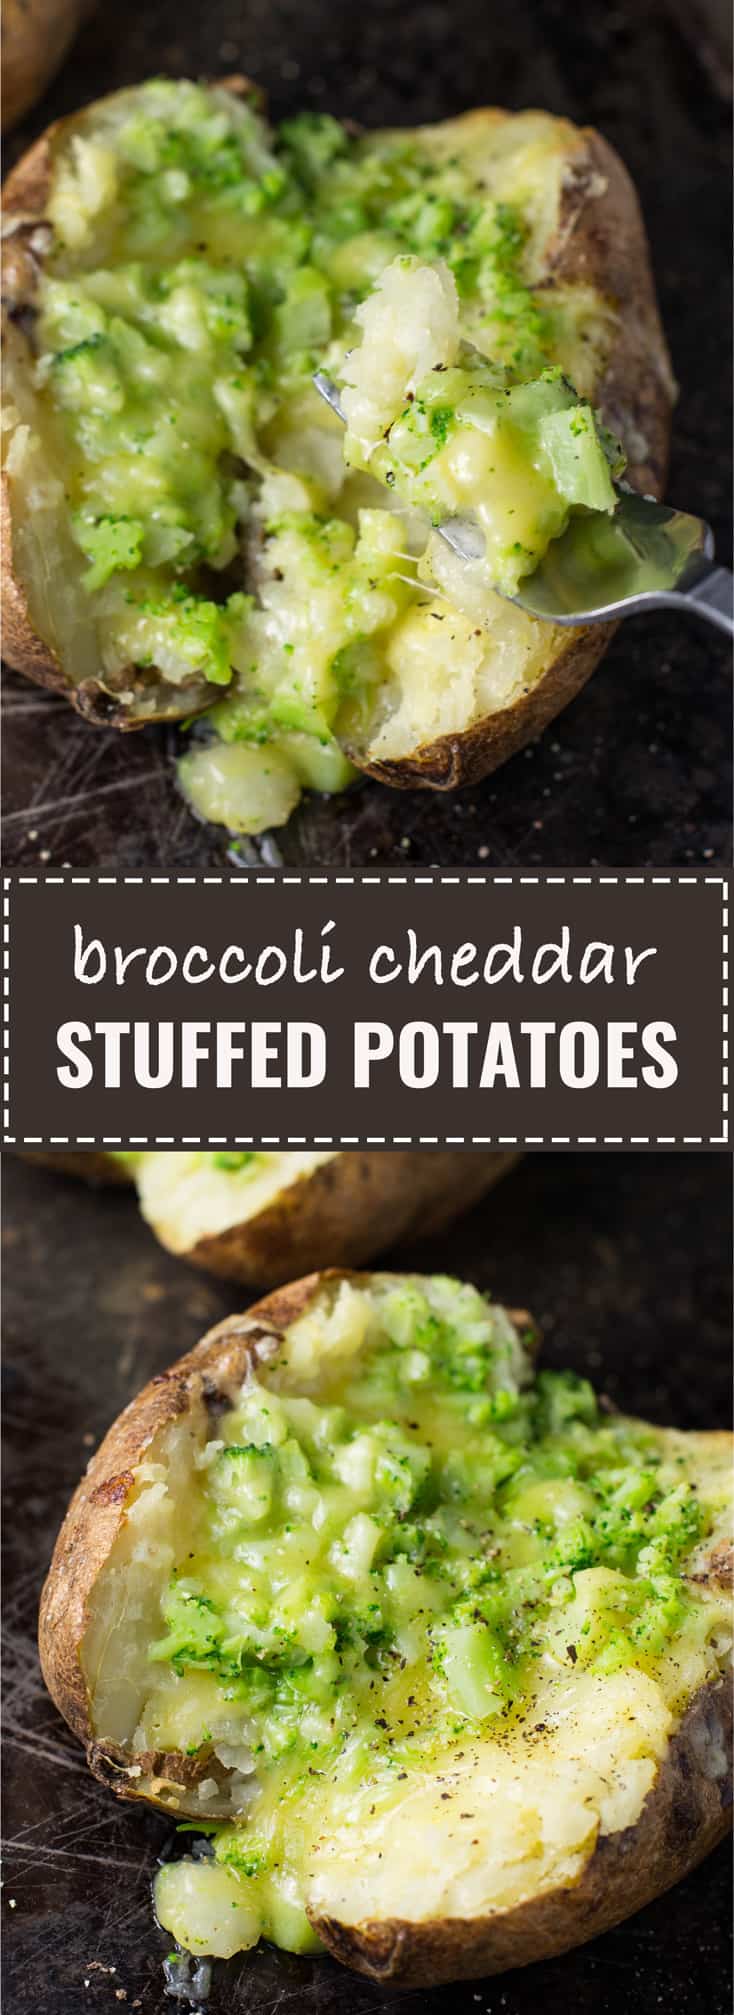 broccoli cheddar stuffed potatoes recipe #vegetarian #broccolicheddar #bakedpotatoes